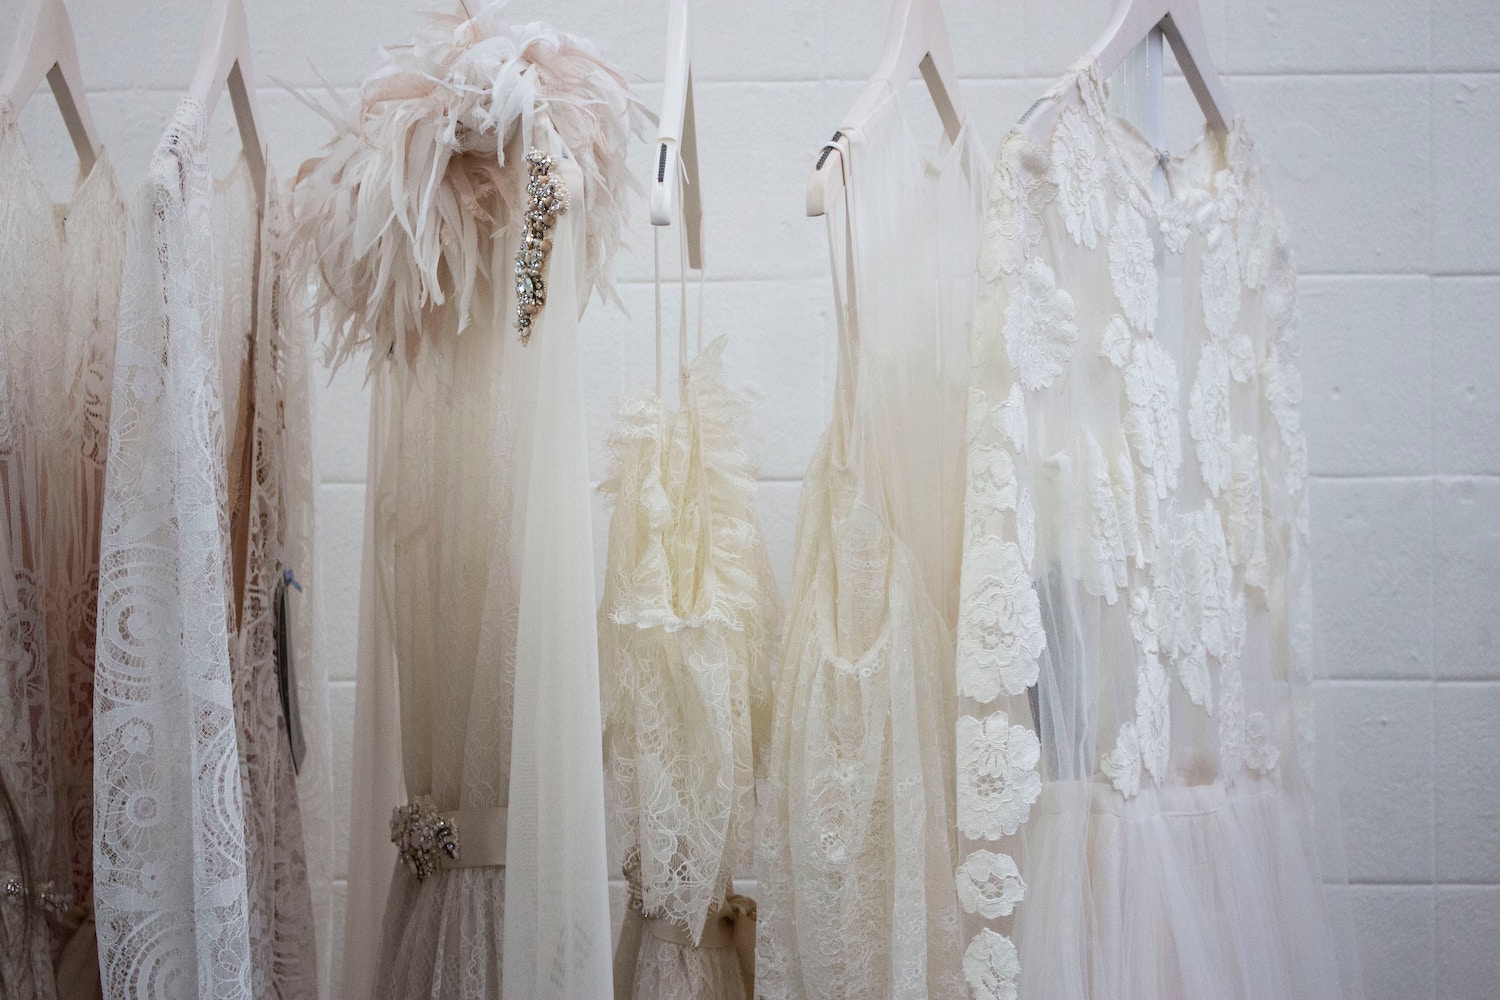 Spring 2020 Bridal Fashion: Off the Runway vs Budget